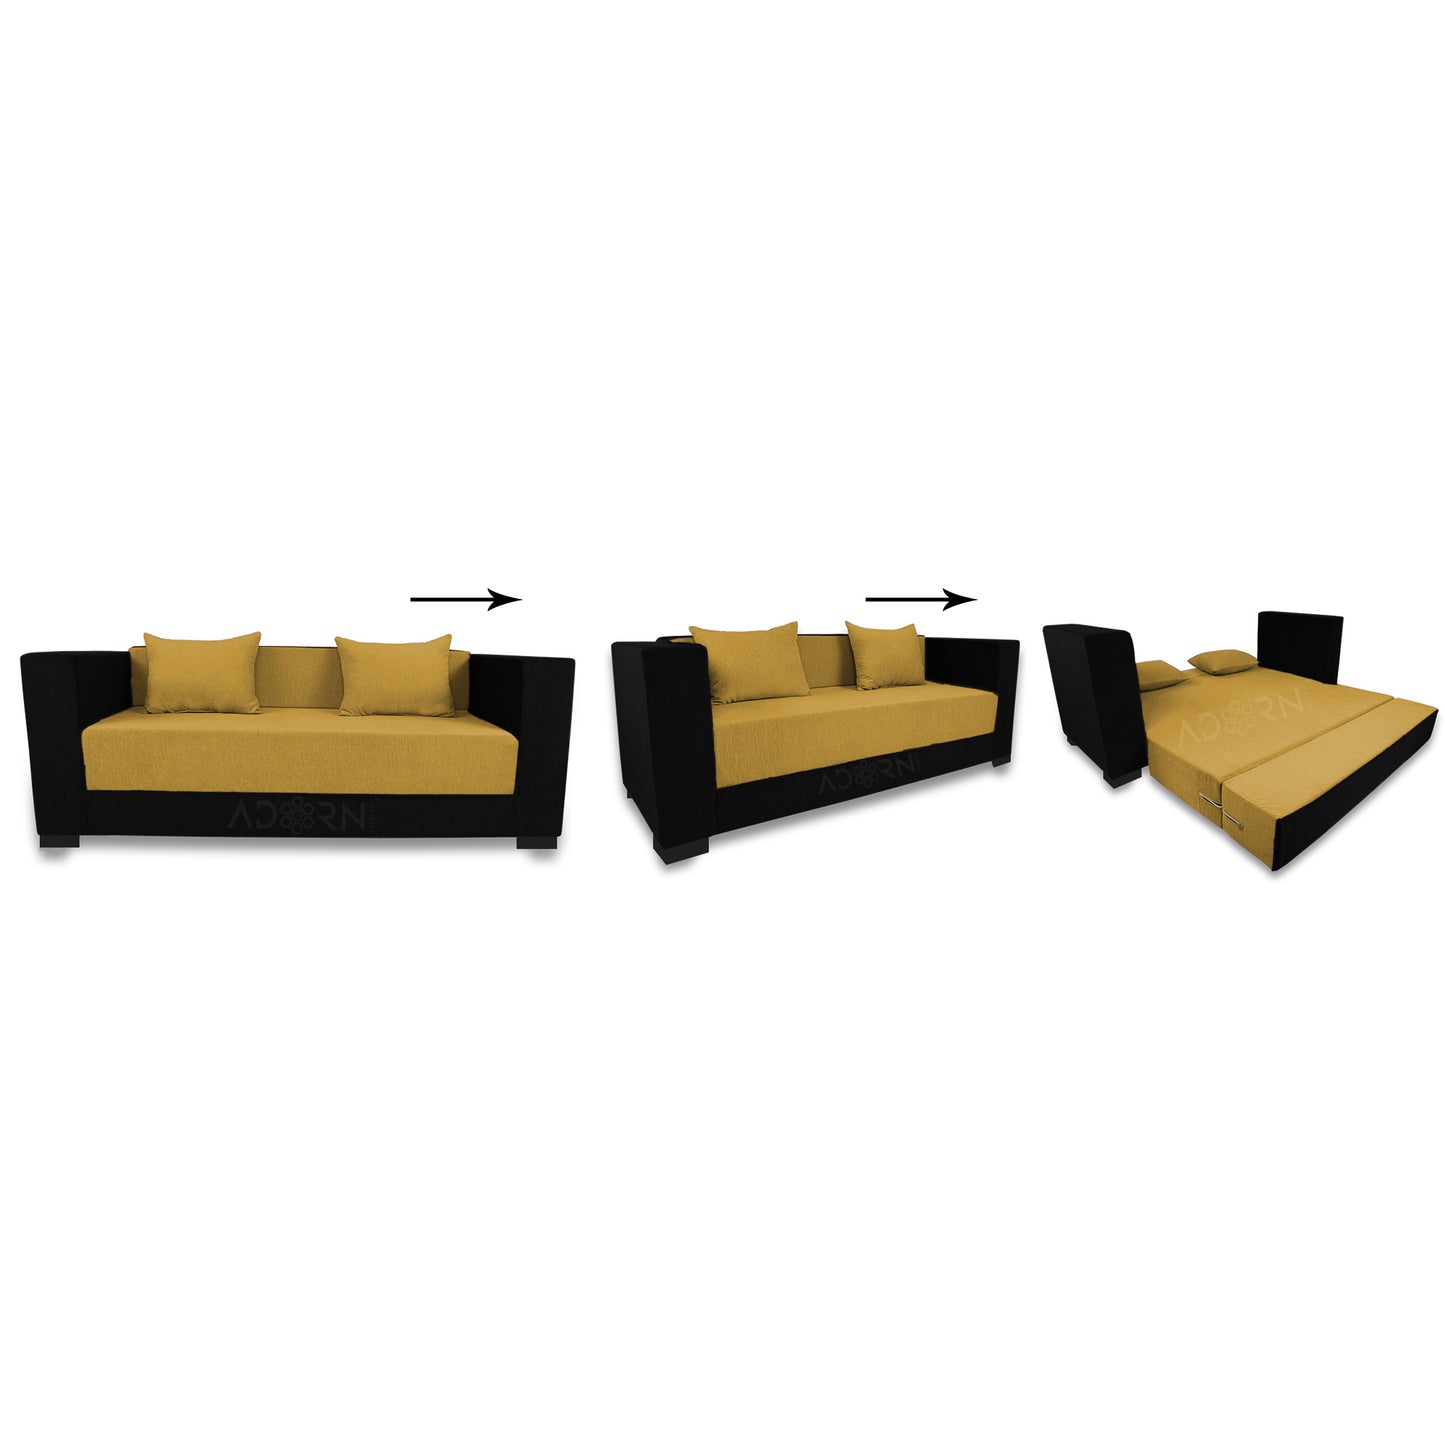 Adorn India Almond 3 Seater Sofa cumbed (Yellow & Black)